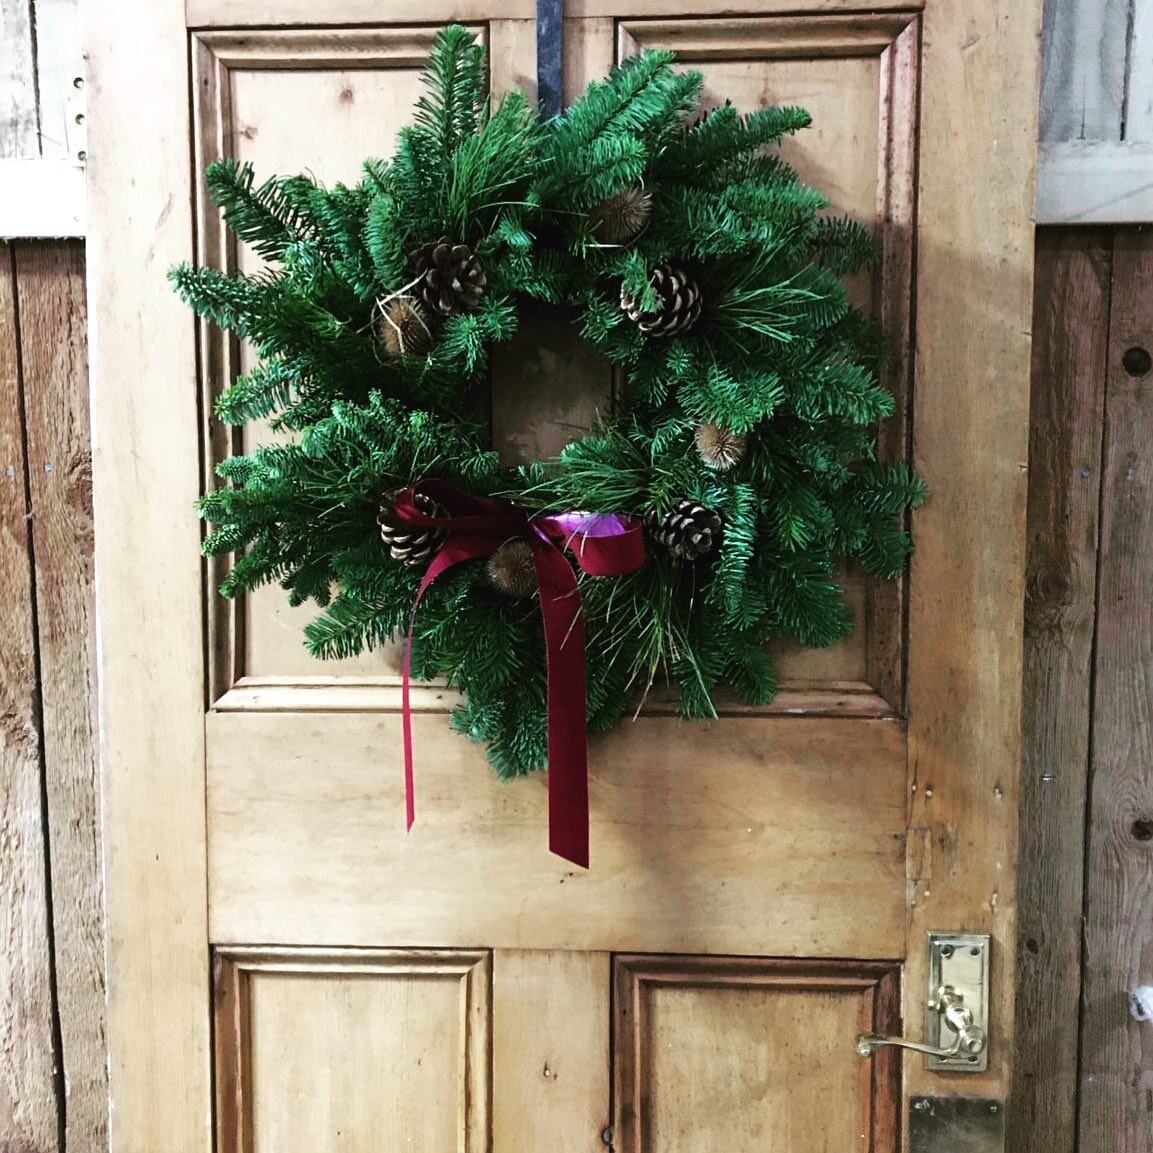 Fresh locally made wreaths now in stock! #snowbirdchristmastreefarm #christmastree #stamford #grantham #wreaths #local #christmastreefarm #christmaswreath